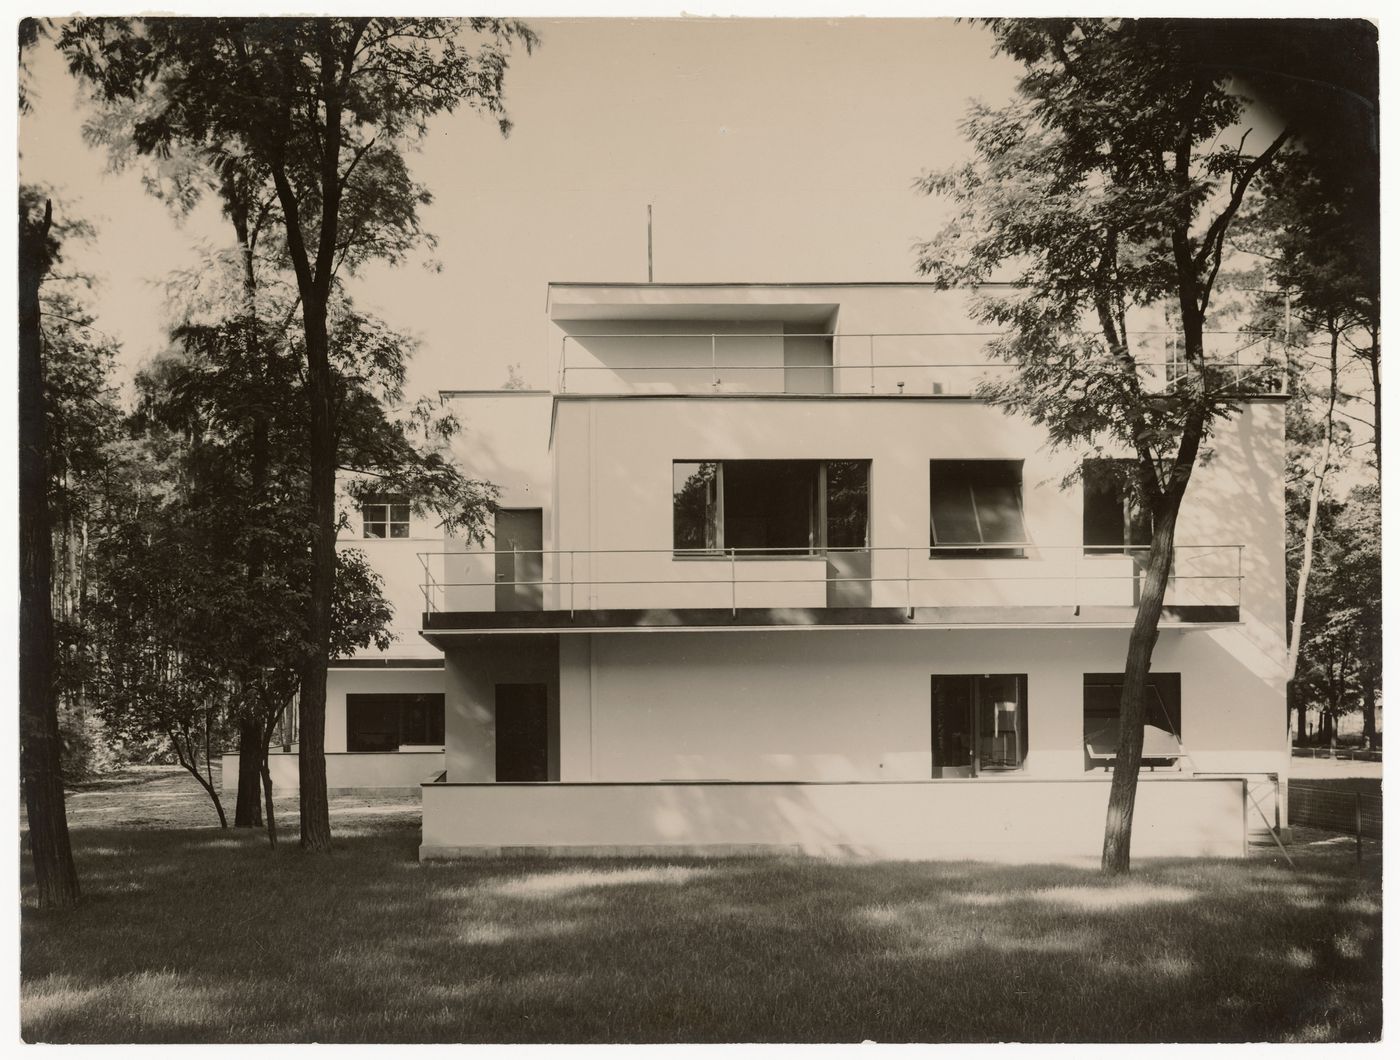 View of the east façade of Moholy-Nagy's house, Bauhaus Masters' Housing, Dessau, Germany